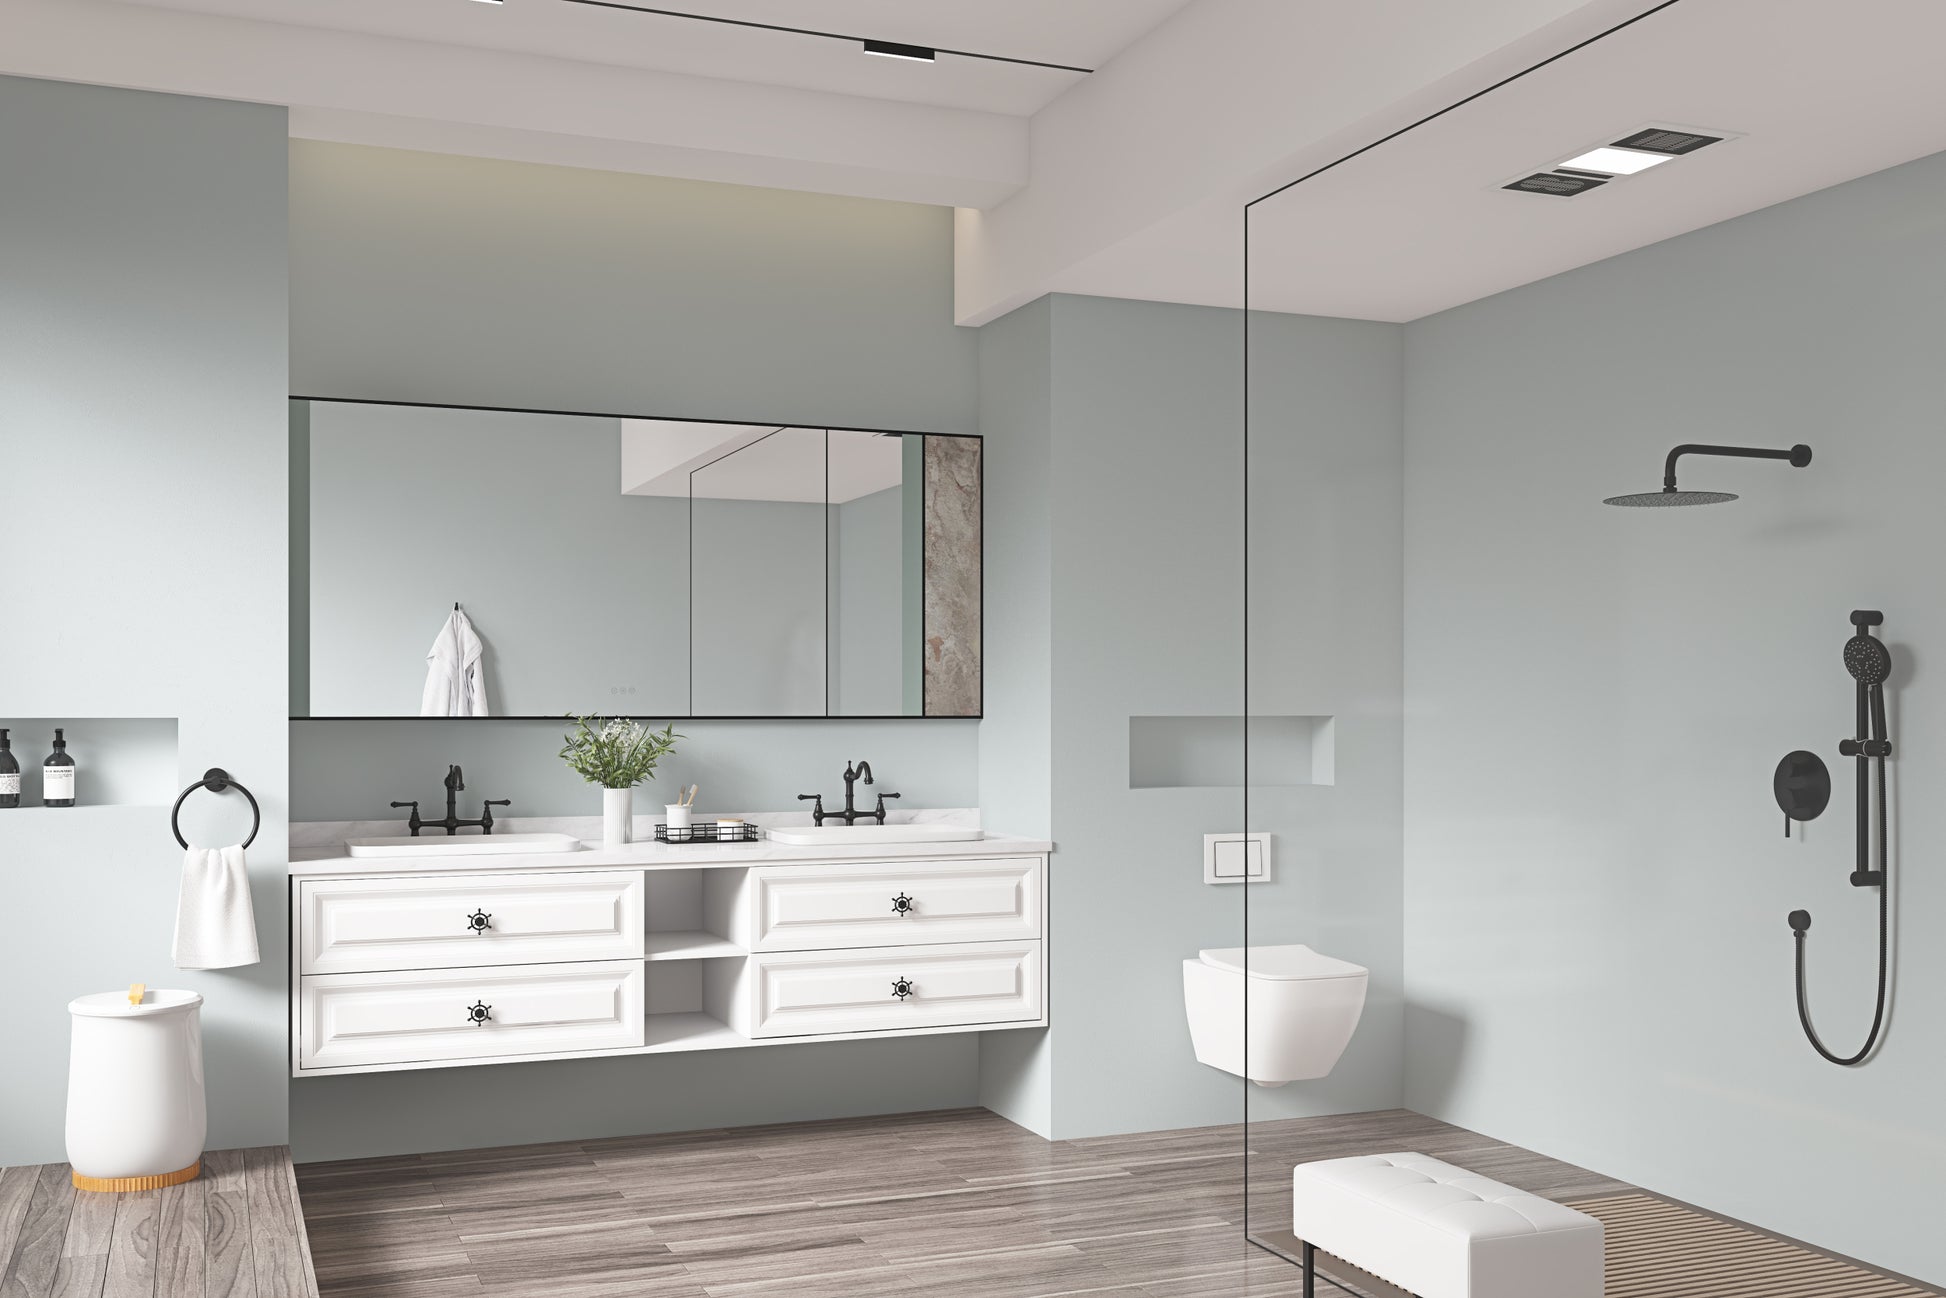 84x 36Inch LED Mirror Bathroom Vanity Mirror with Back matt black-aluminium